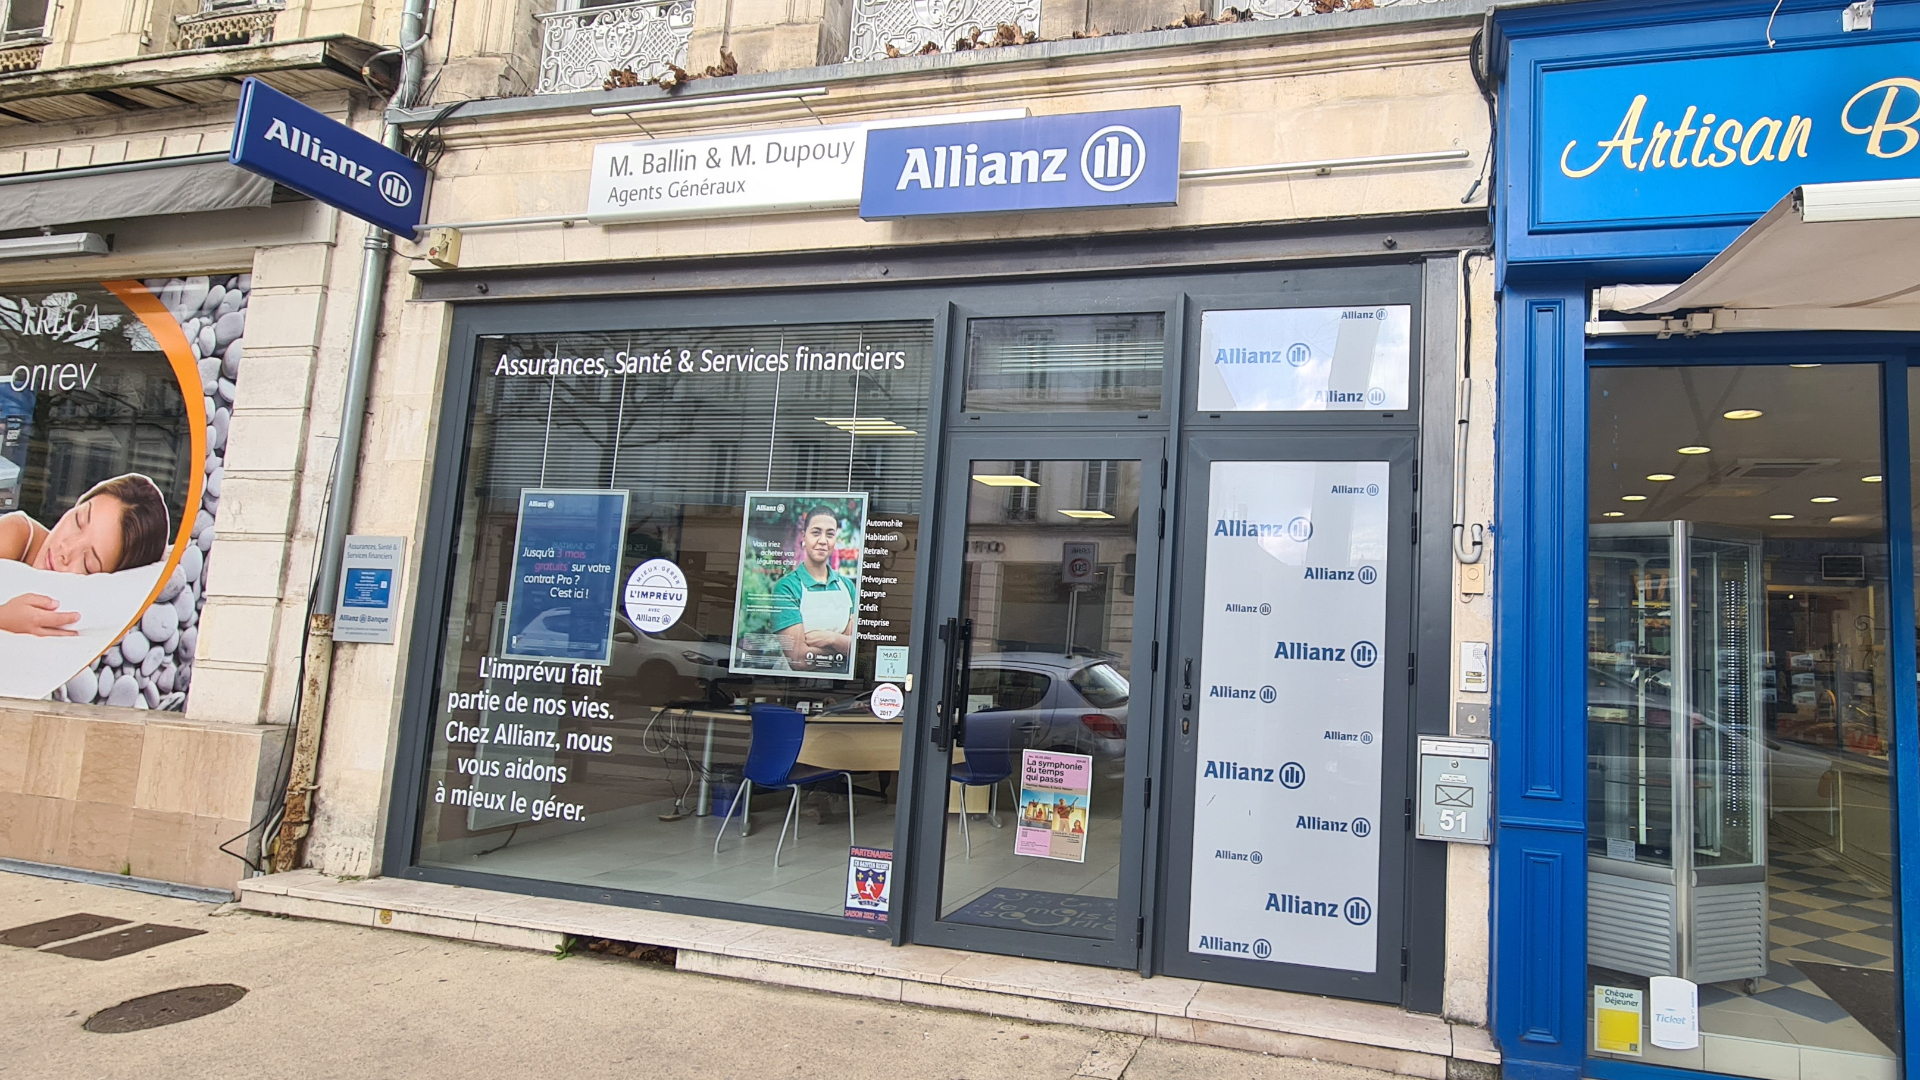 Allianz SAINTES RICHELIEU - BALLIN & DUPOUY